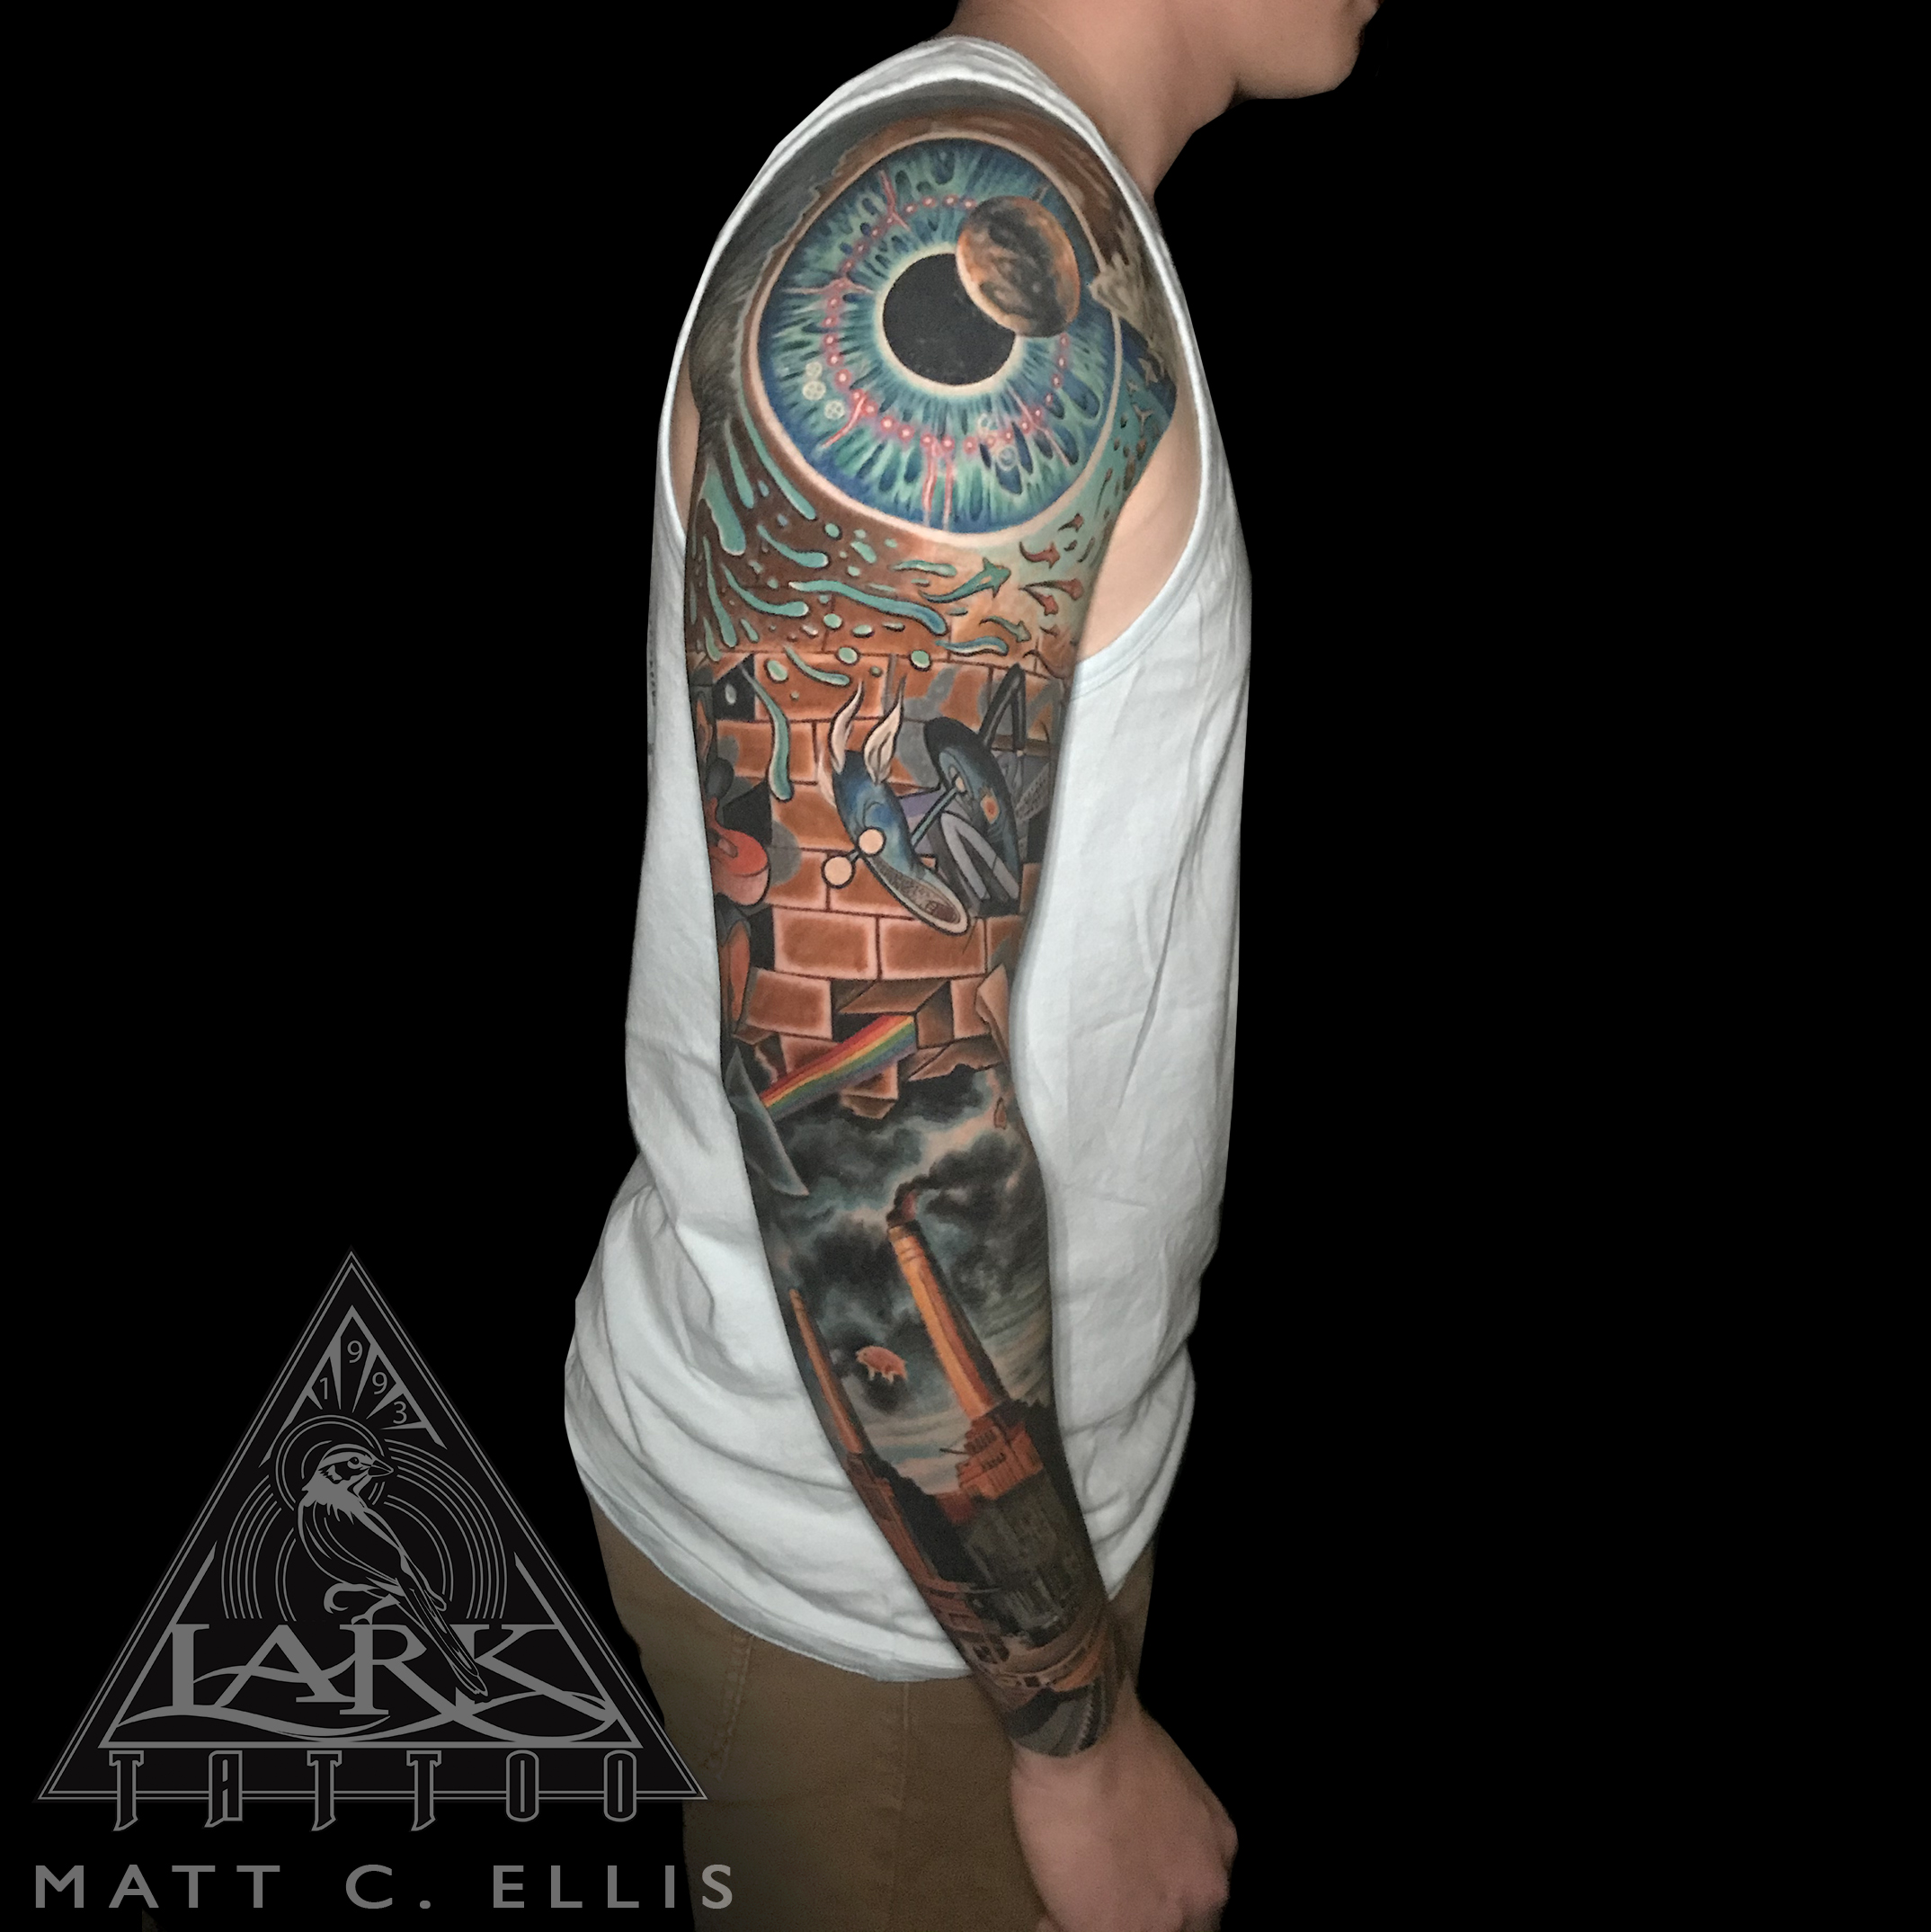 New tattoo uploaded to Matt C. Ellis portfolio 12/3/20 - -